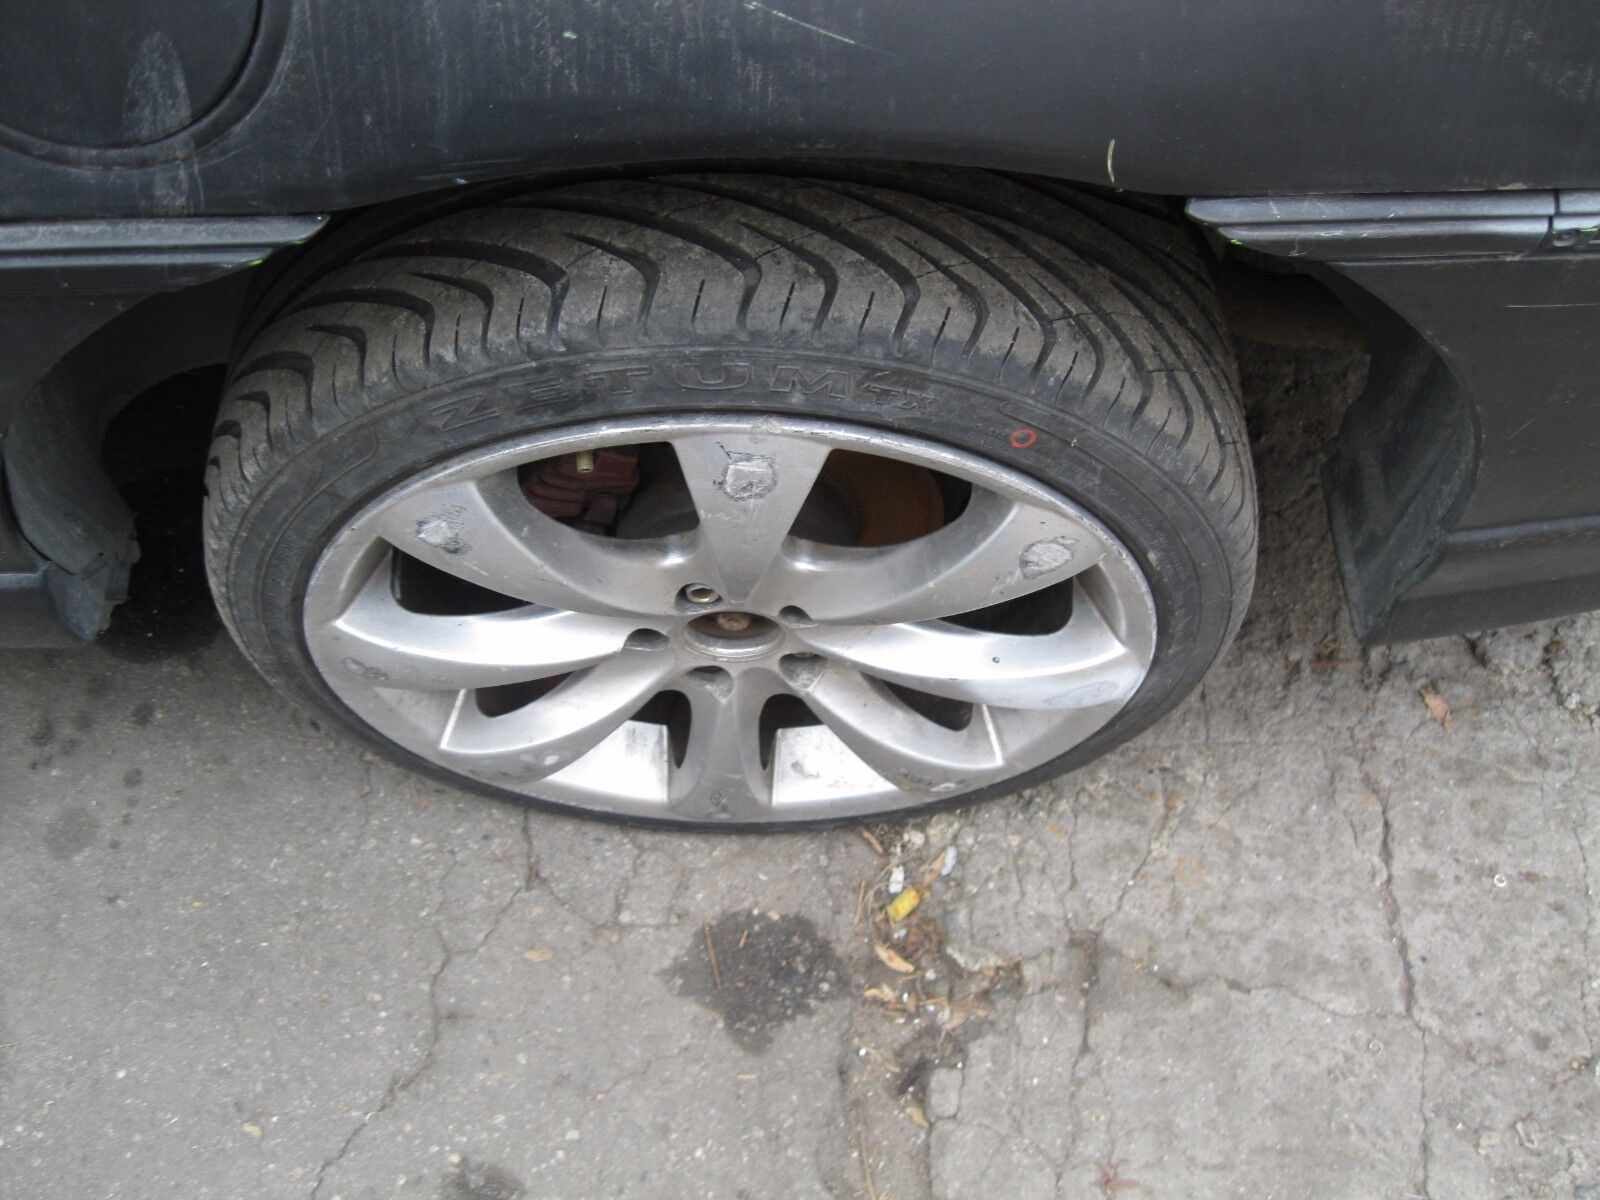 Fiero Pontiac USED after market Alloy Wheels  4 rough w/tires